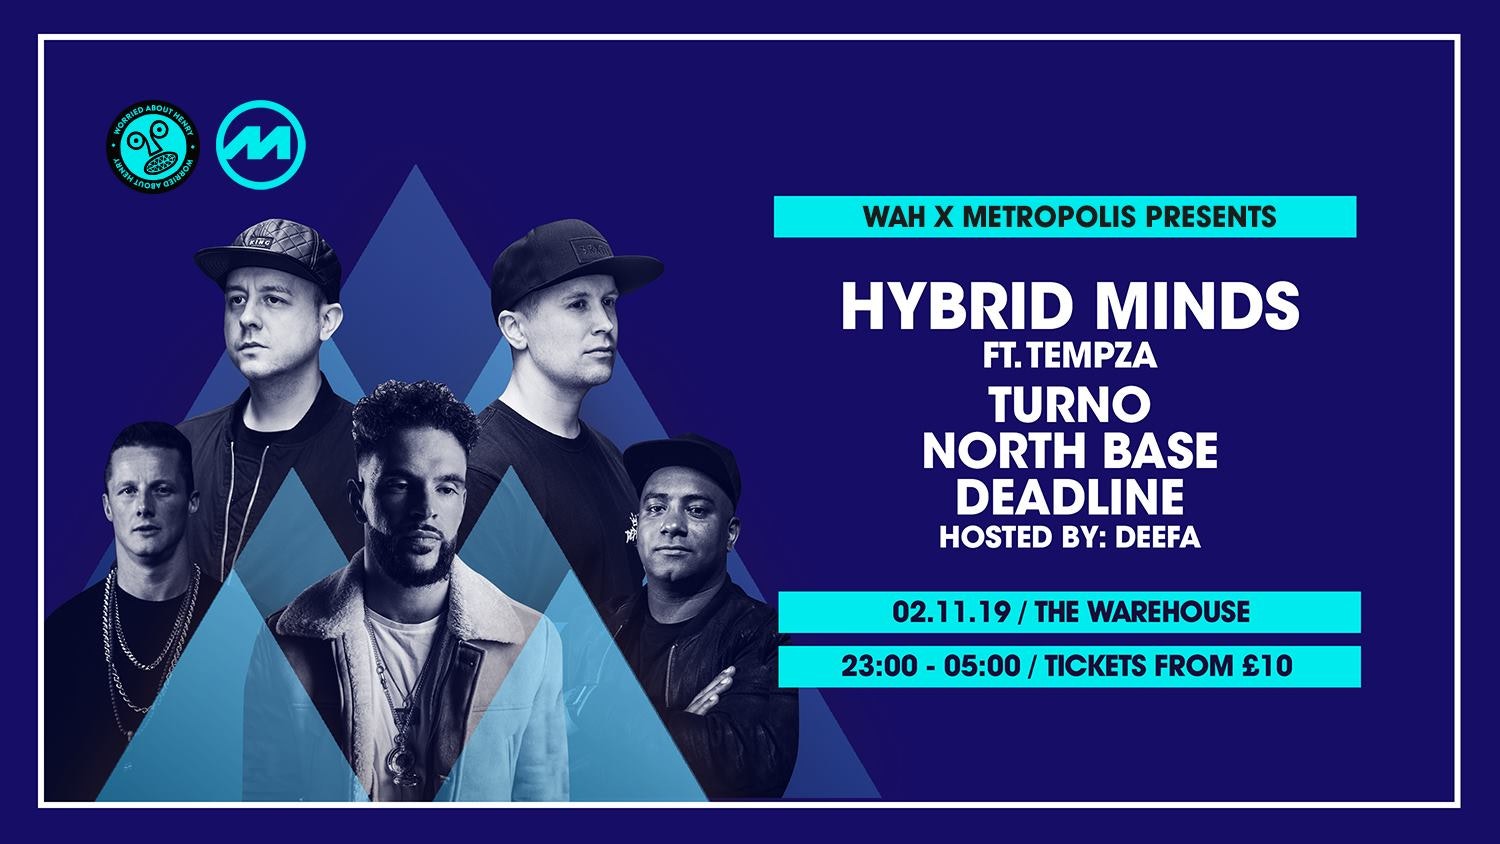 Hybrid Minds, Turno, North Base at The Warehouse Leeds